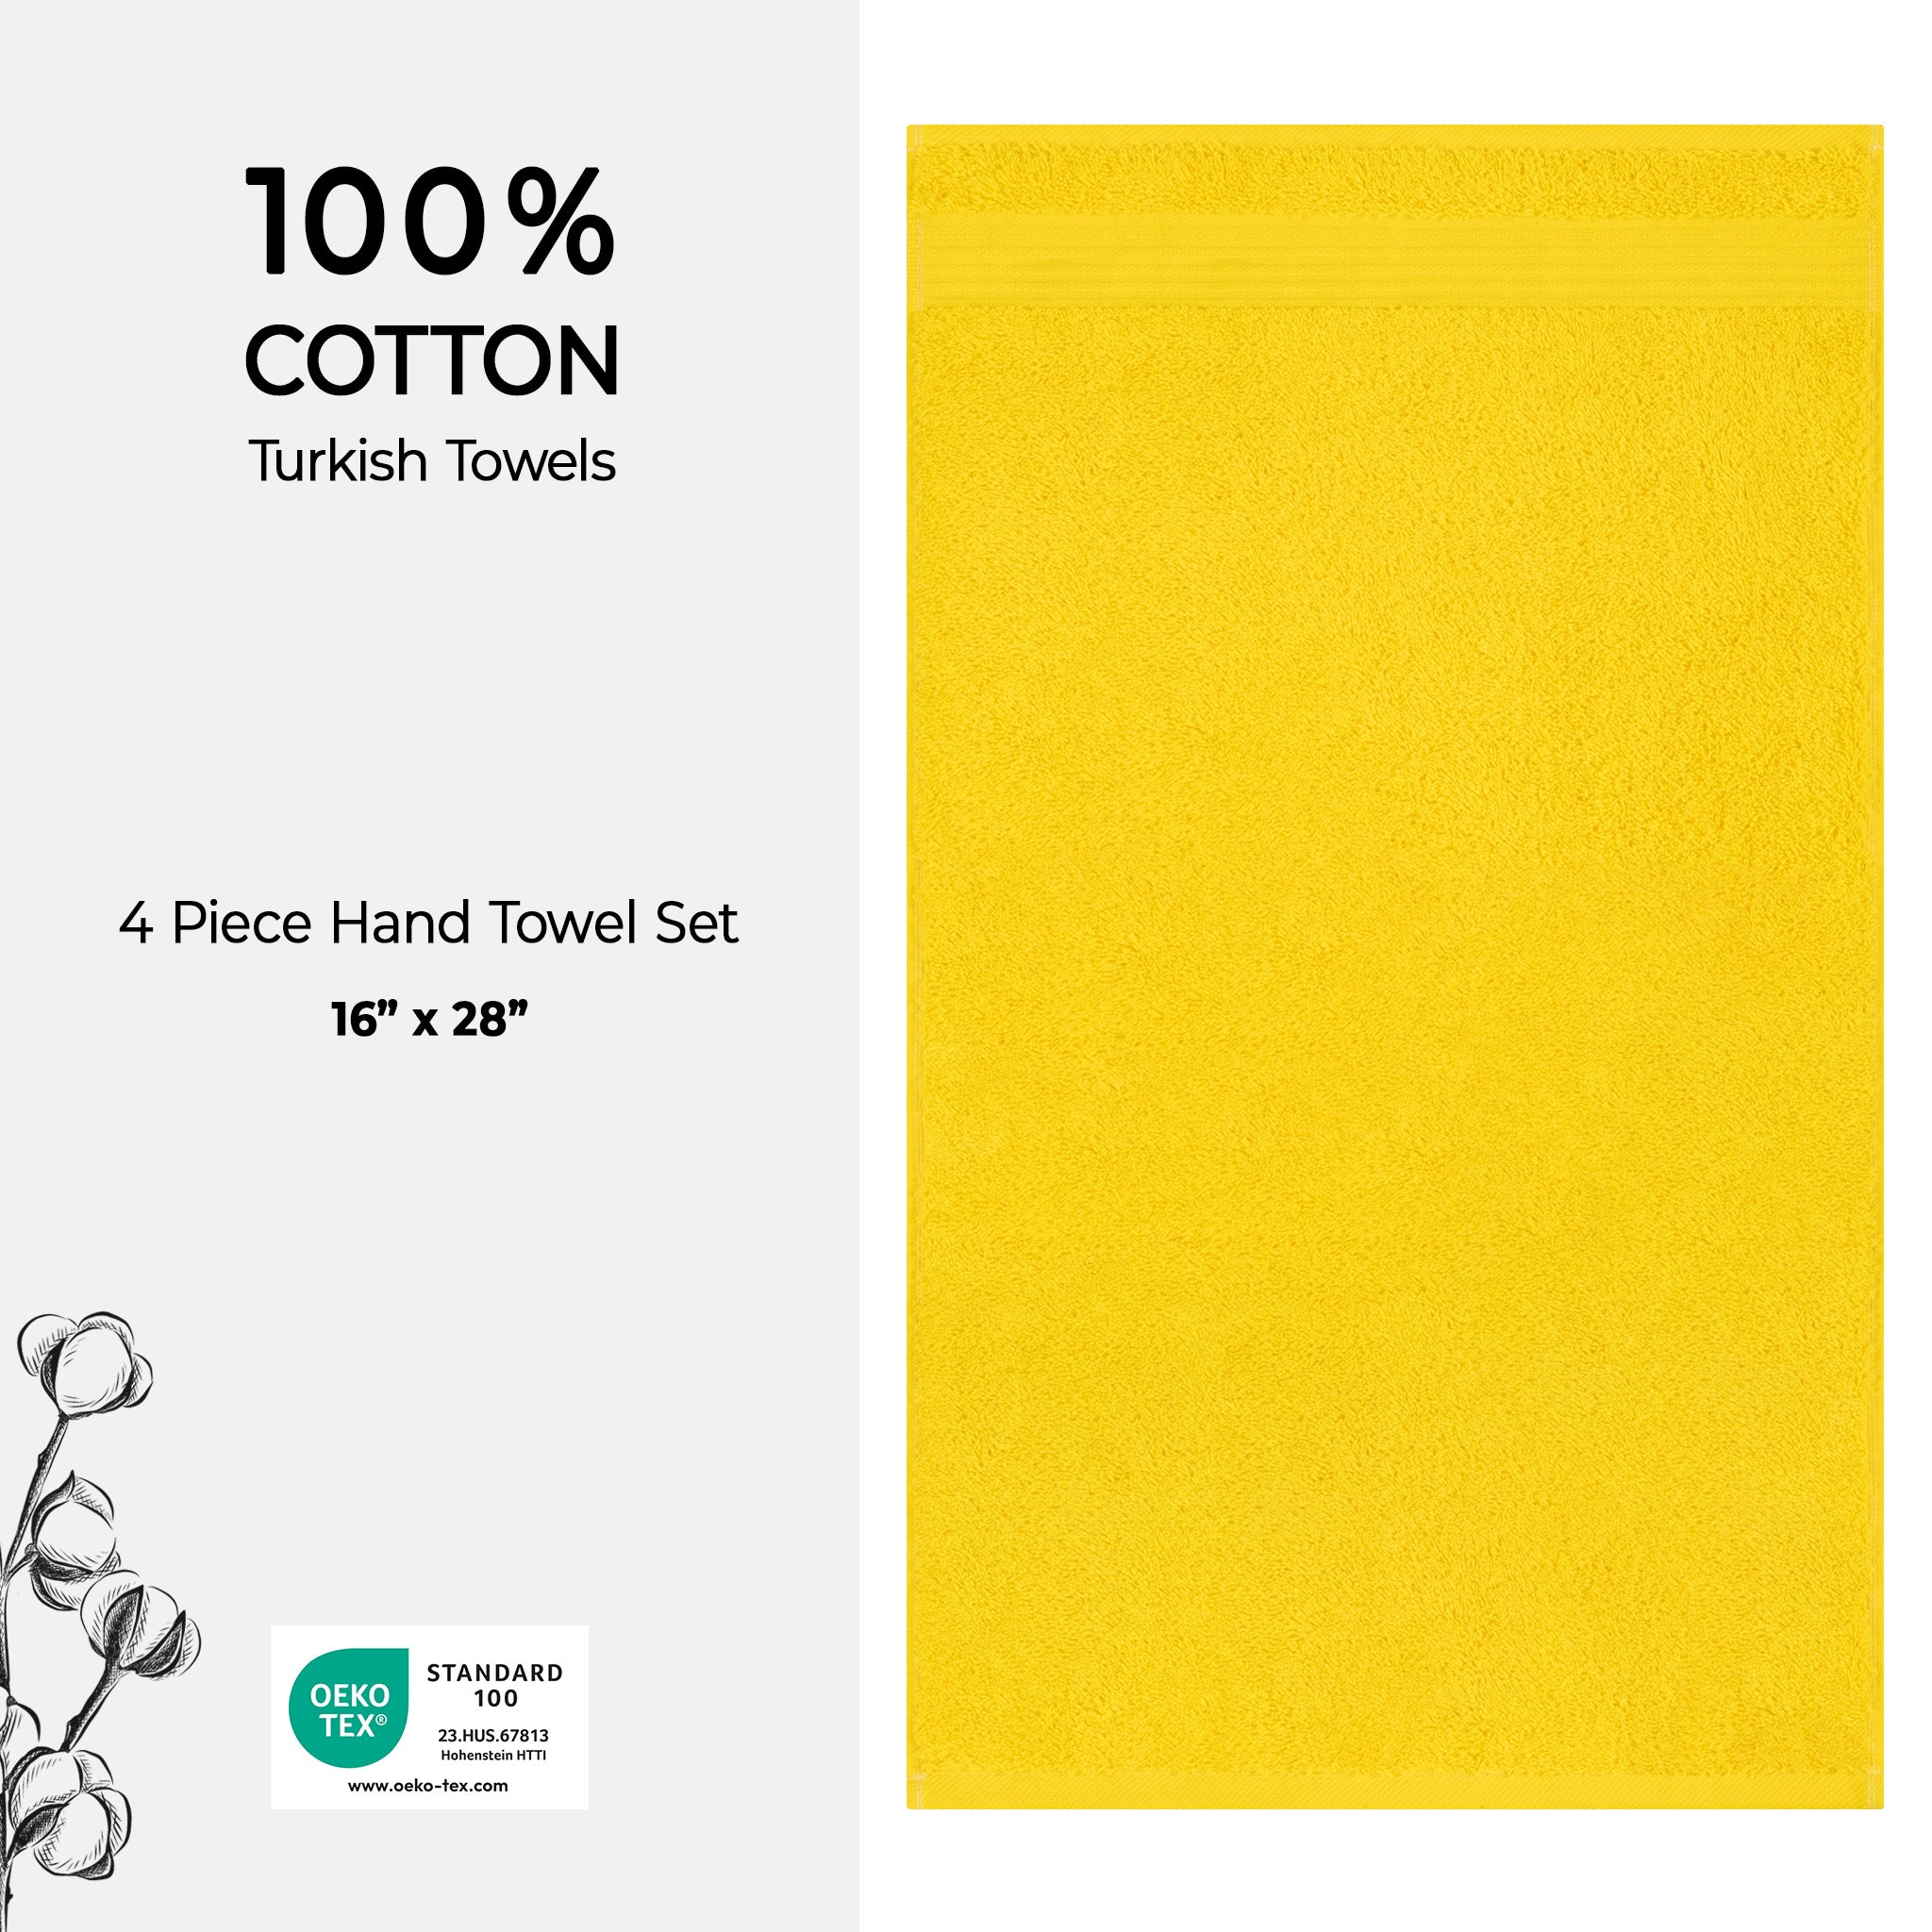 American Soft Linen Bekos 100% Cotton Turkish Towels, 4 Piece Hand Towel Set -yellow-04